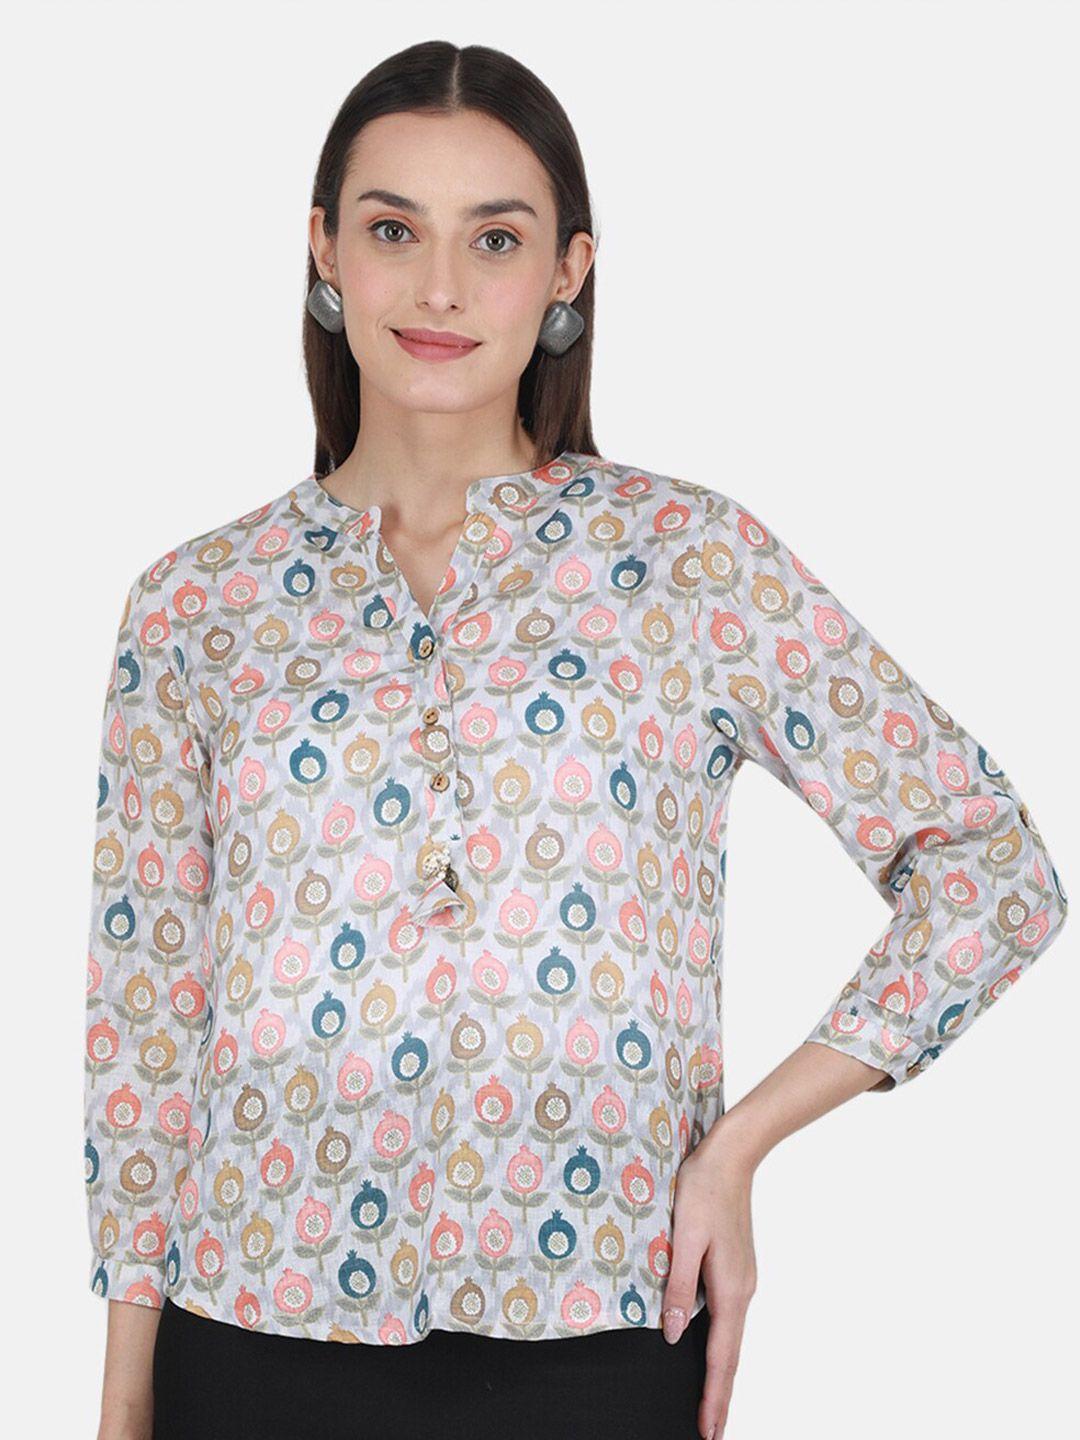 monte carlo ethnic motifs print mandarin collar shirt style top